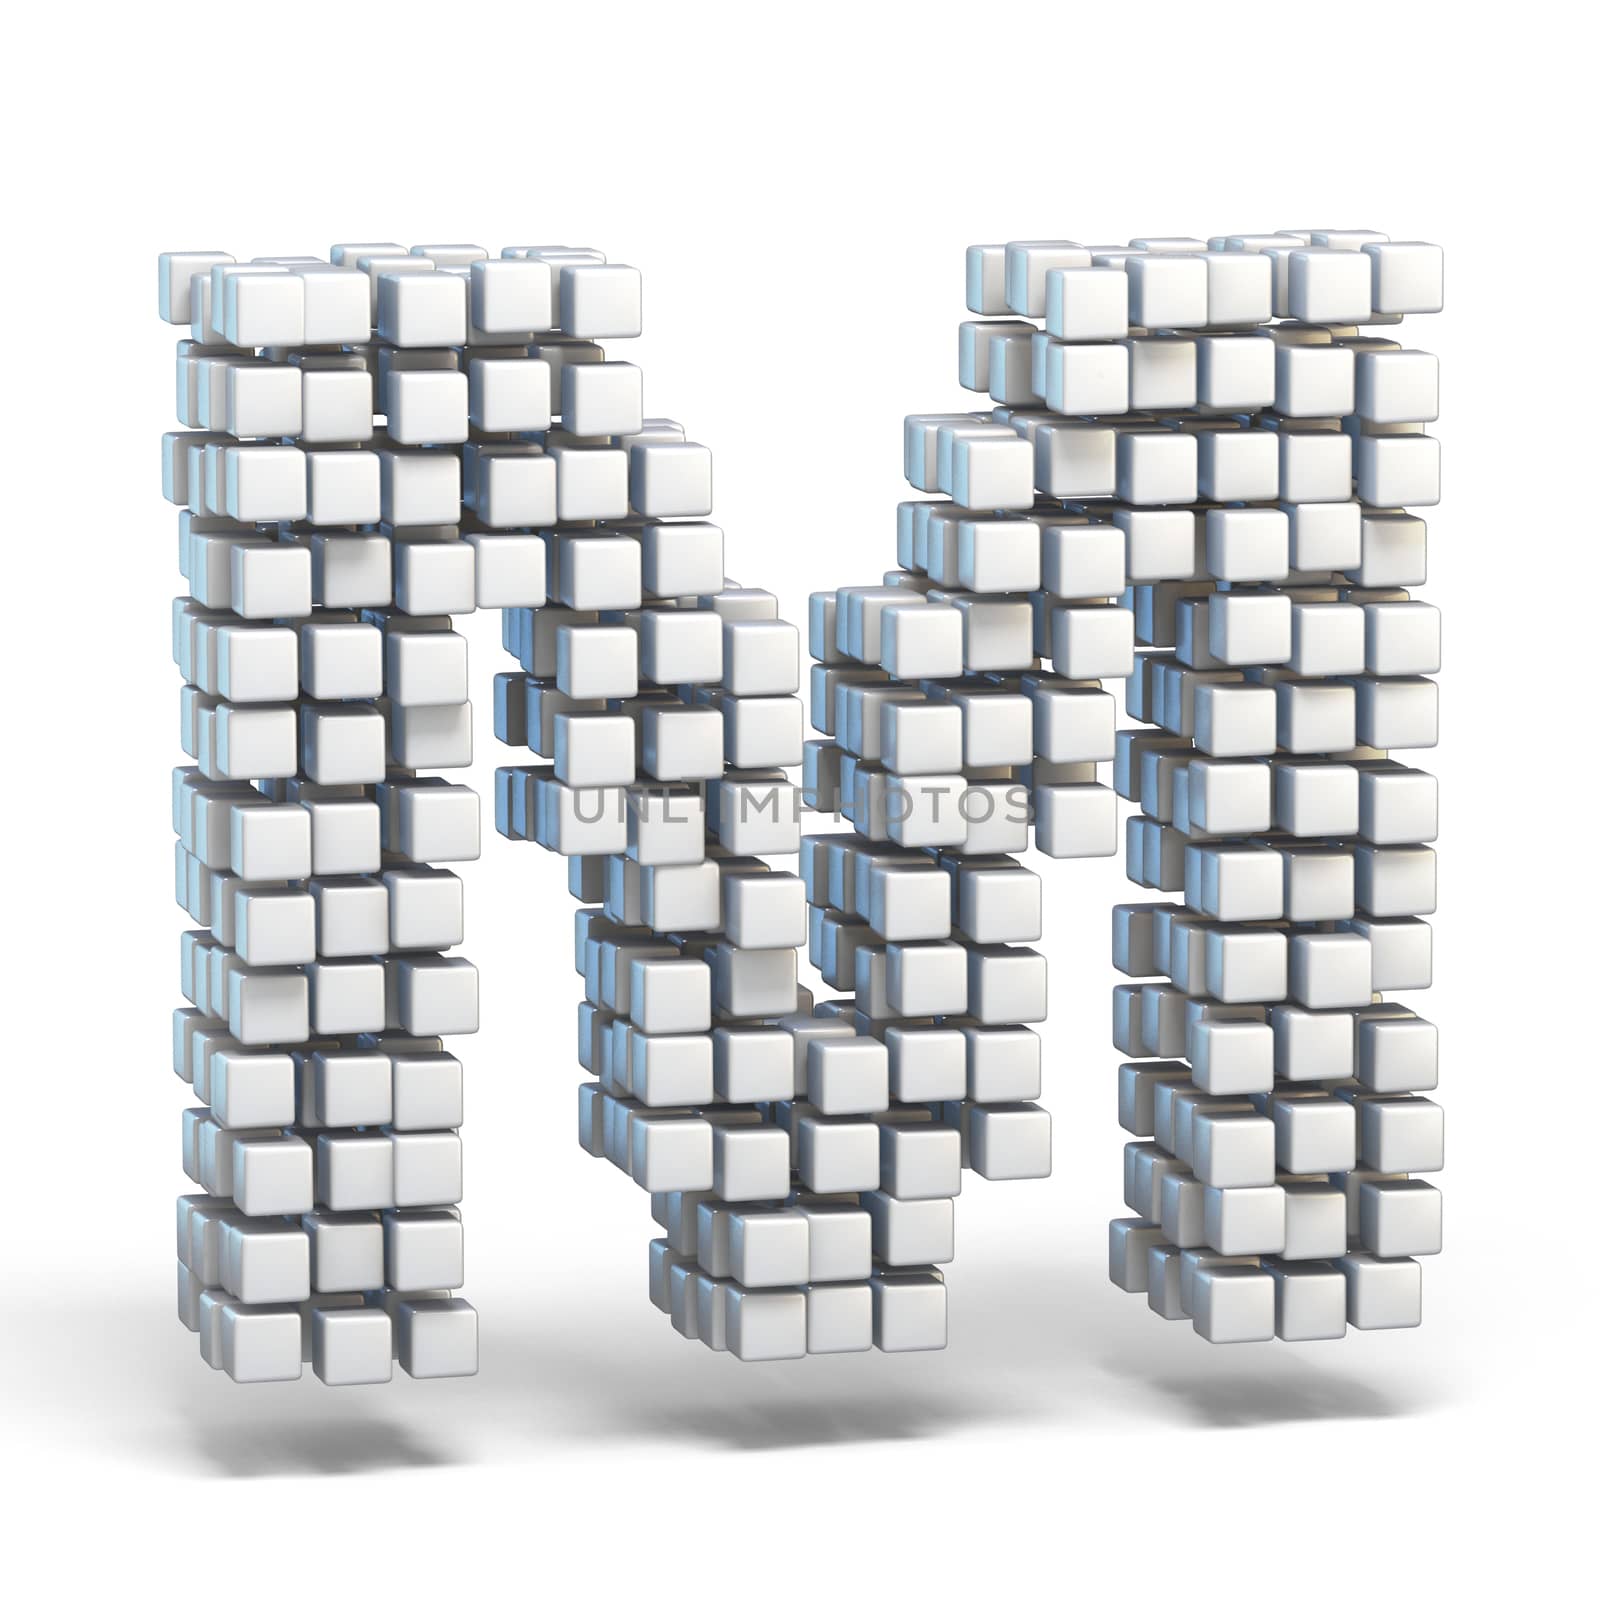 White voxel cubes font Letter M 3D render illustration isolated on white background